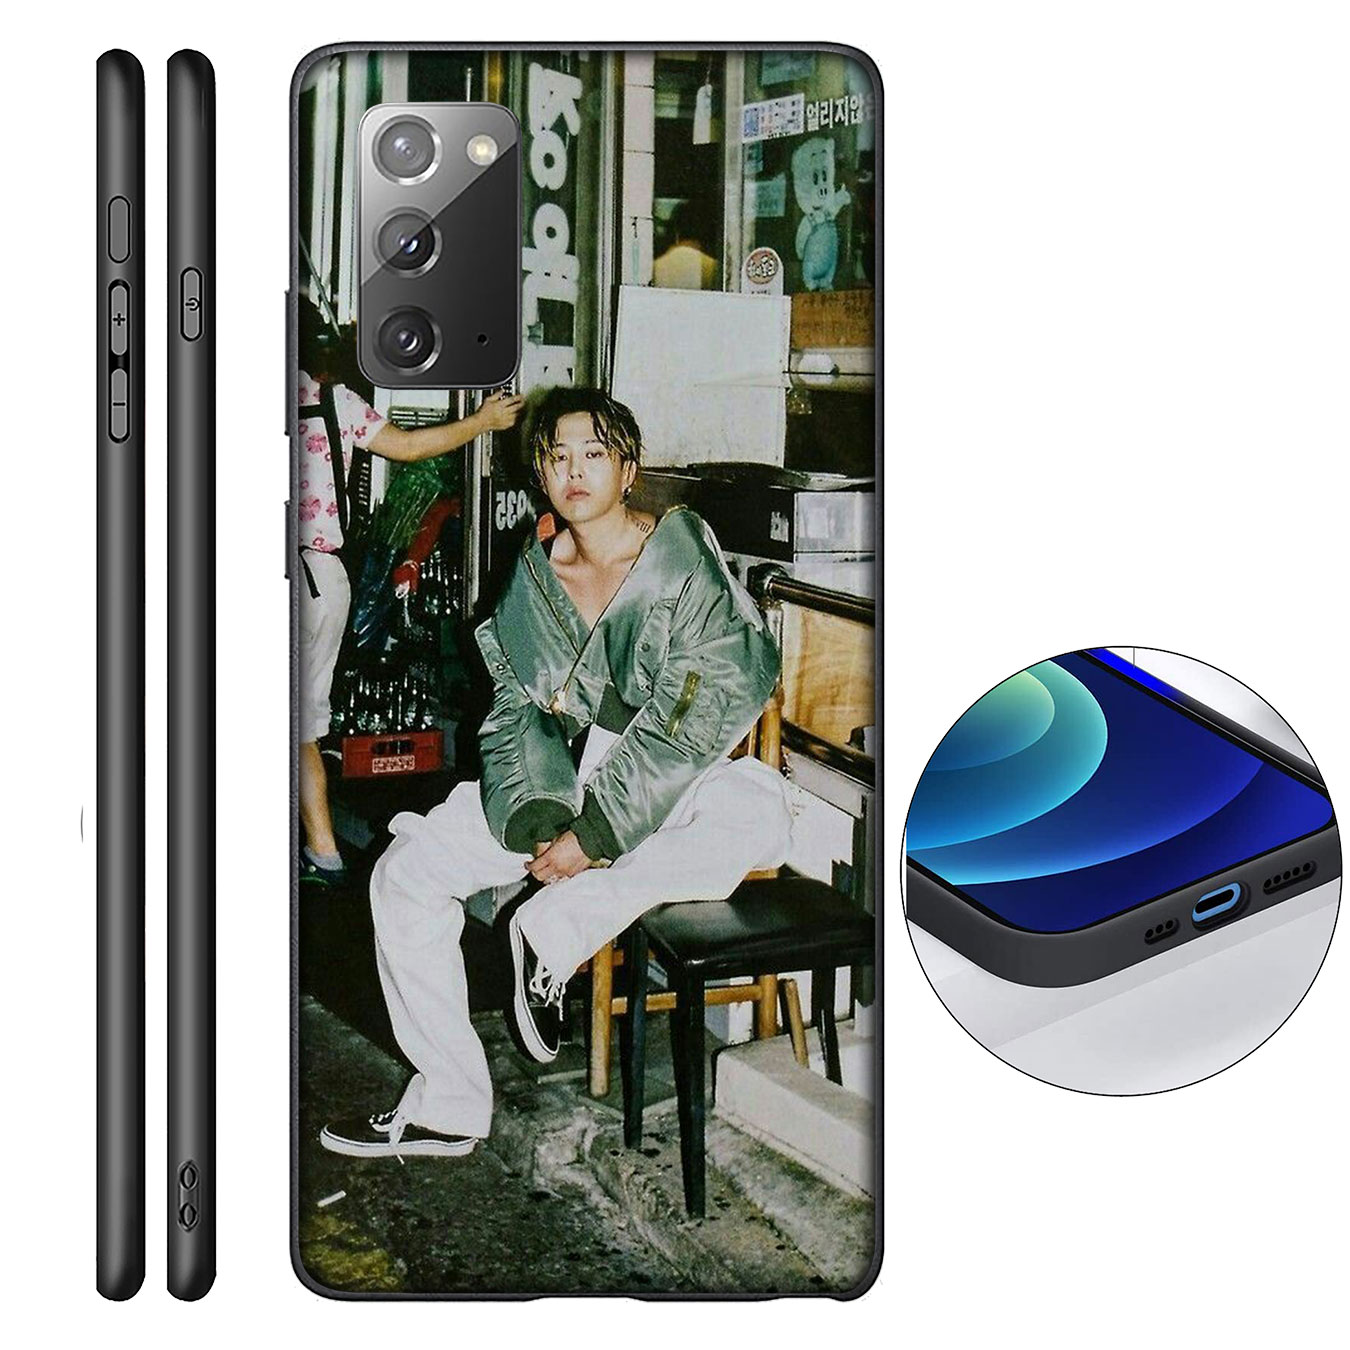 Ốp Điện Thoại Silicon Mềm Hình G-Dragon Cho Samsung Galaxy A02S J2 J4 Core J5 J6 Plus J7 Prime J6 + A42 + K109